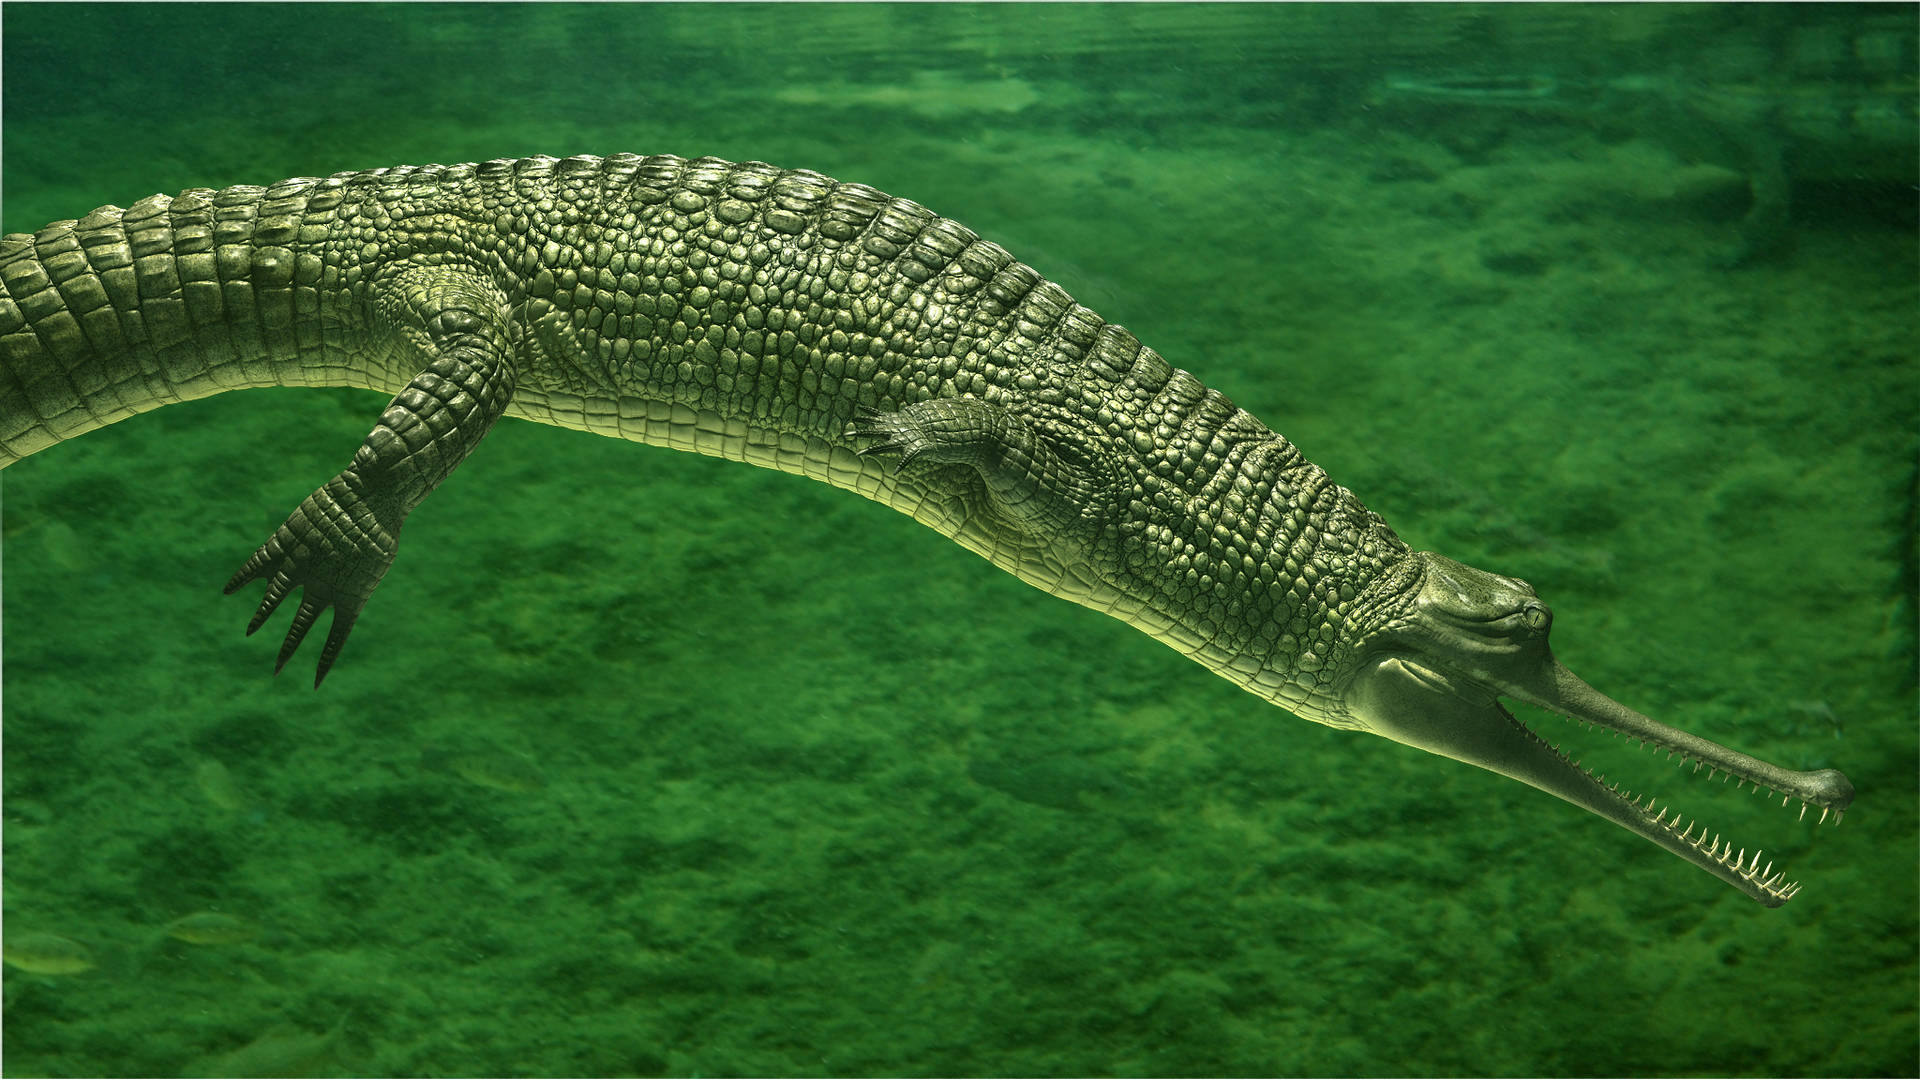 Gavial Crocodile Green Lake Nature Photography Wallpaper